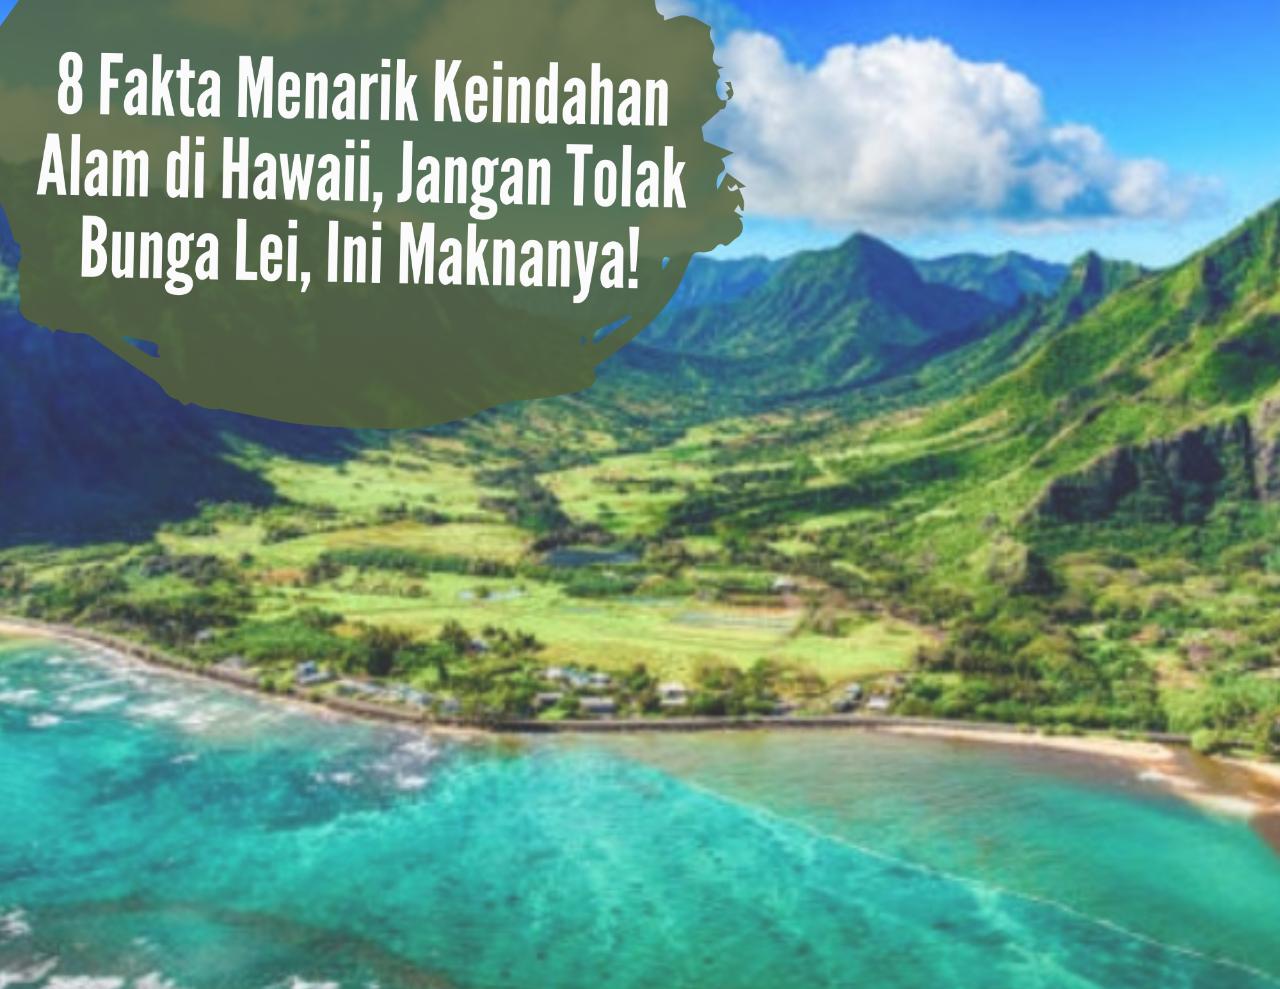 8 Fakta Menarik Keindahan Alam di Hawaii, Jangan Tolak Bunga Lei, Ini Maknanya!